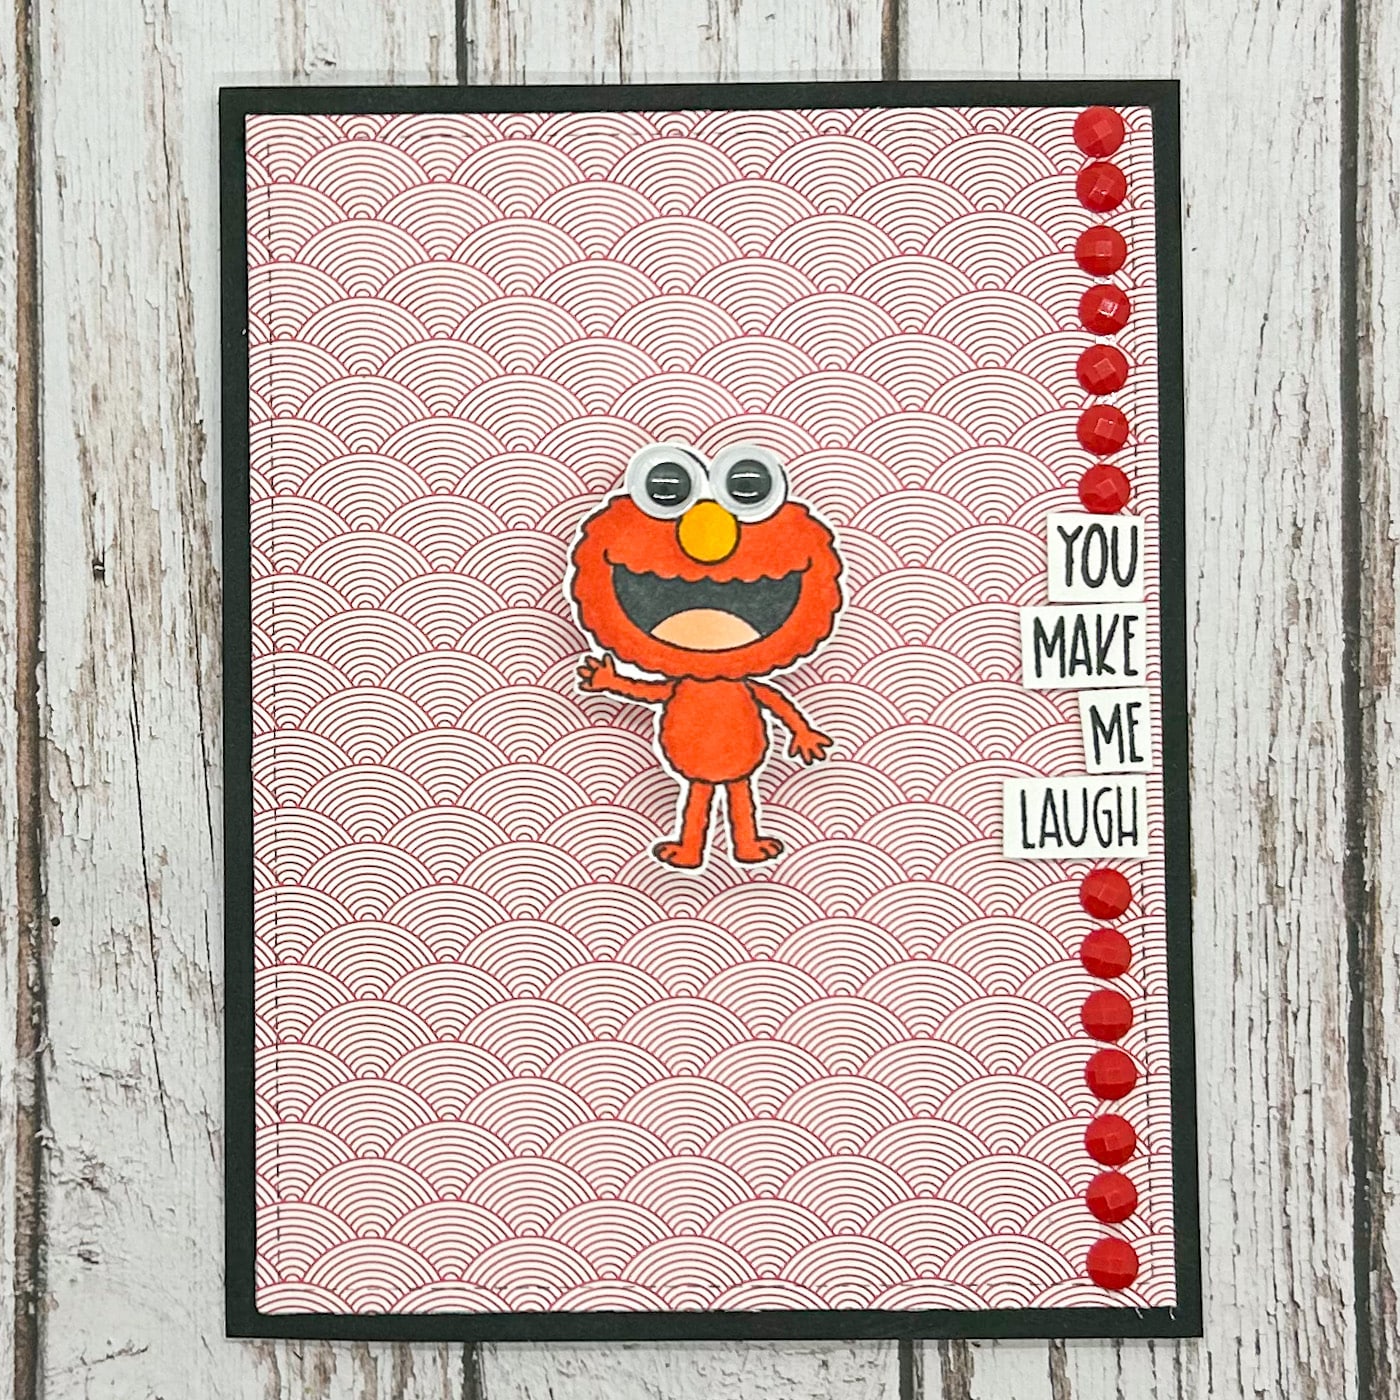 Red Elmo Character Themed Handmade Card